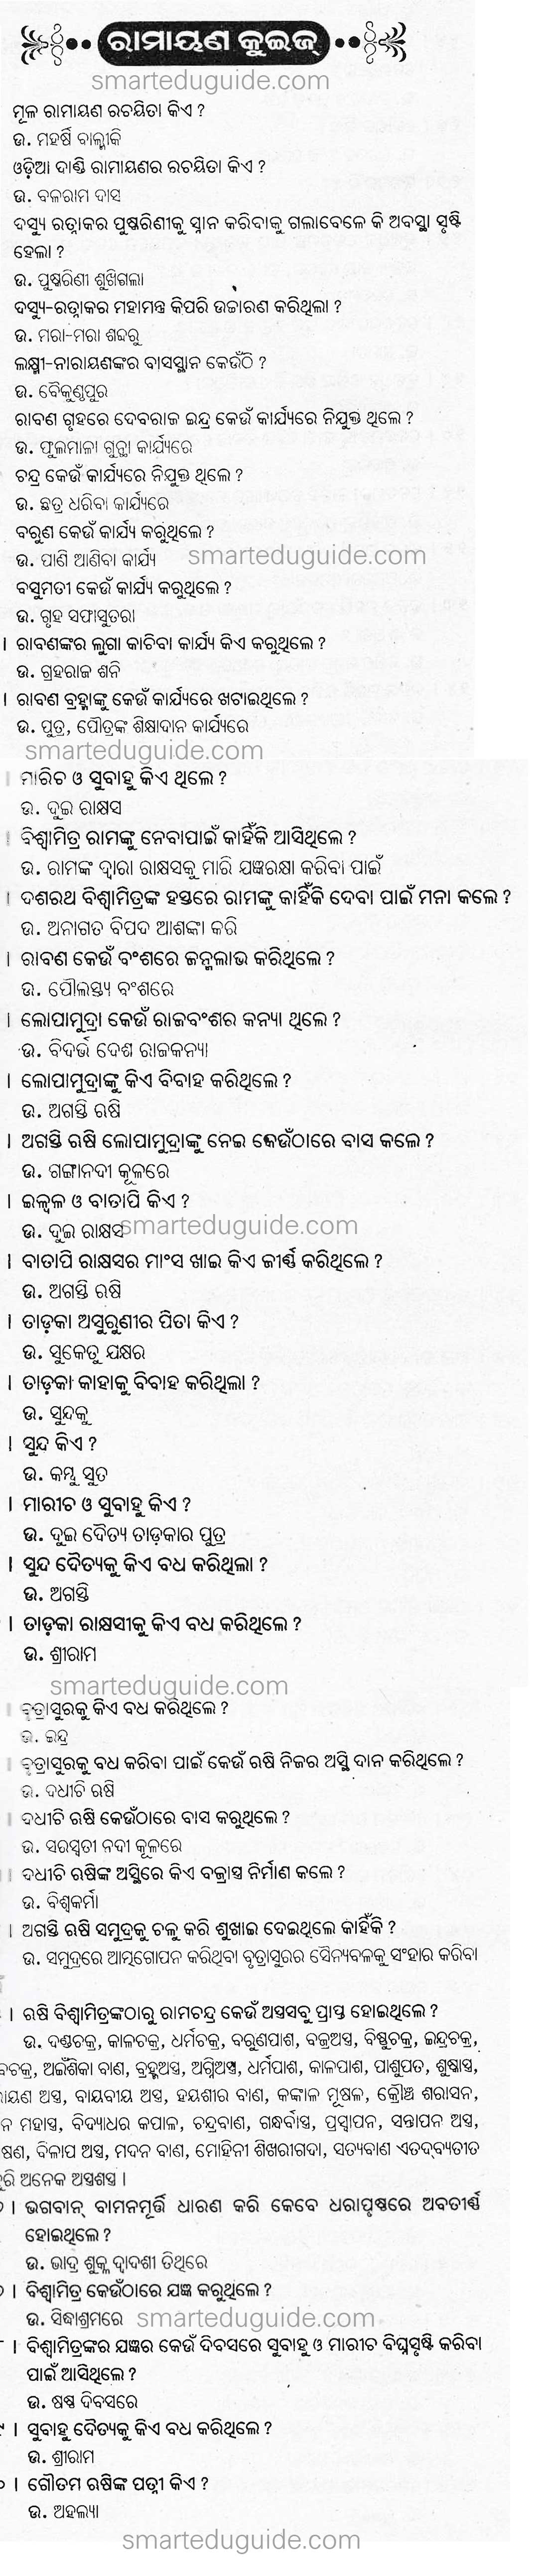 Ramayana-quiz-odia-pdf